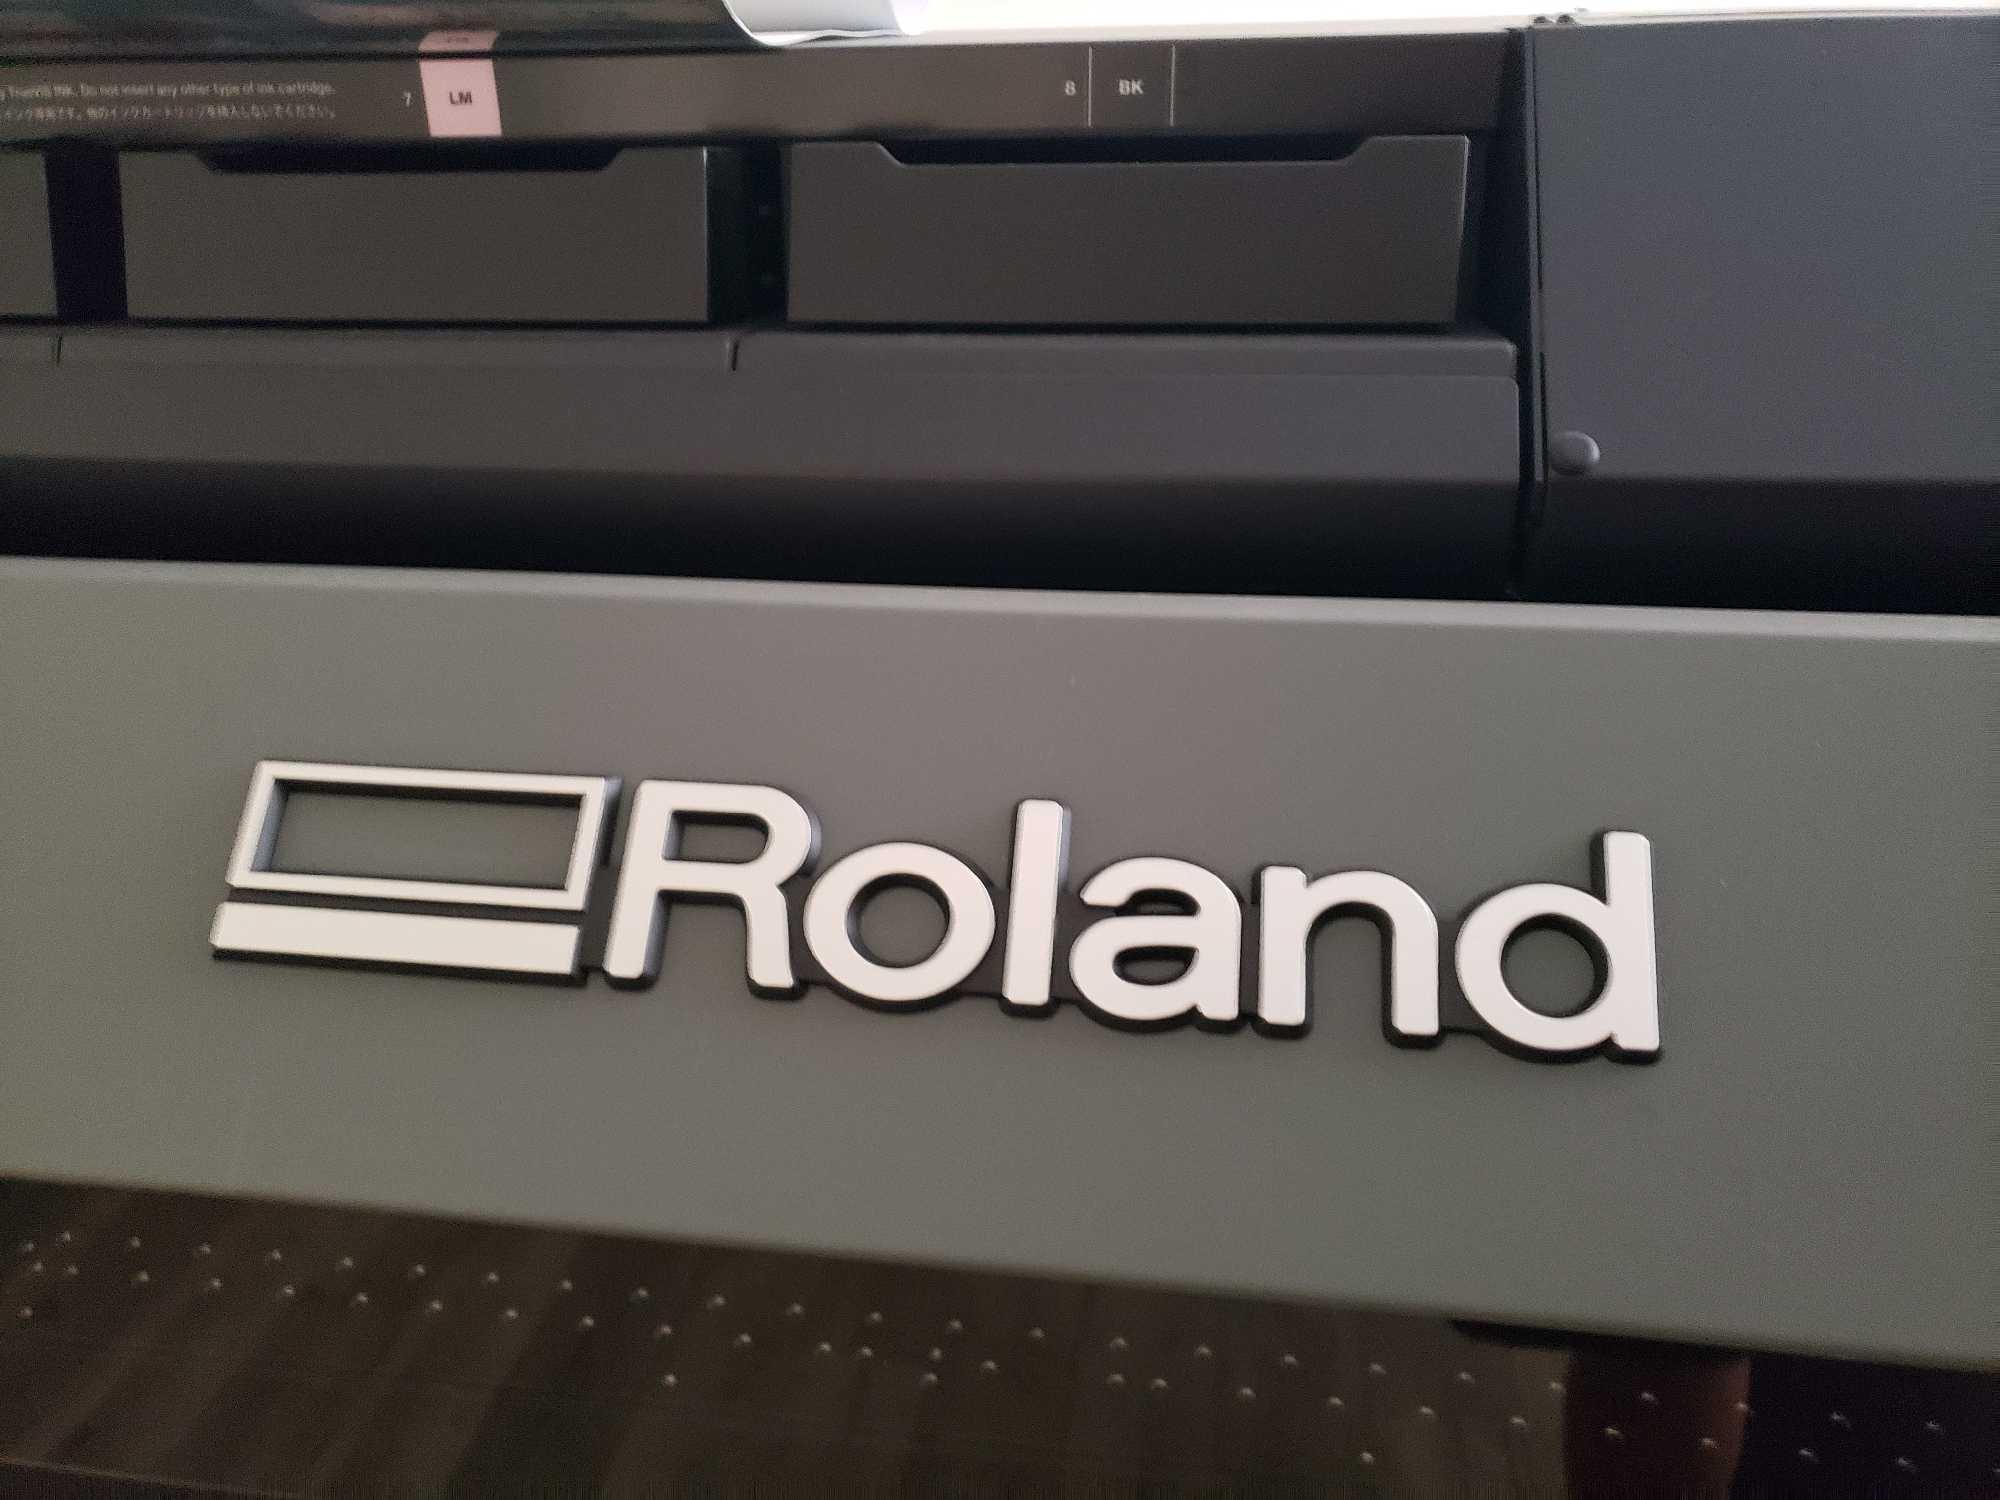 Roland TrueVIS VG3-540 Large-Format Inkjet Printer and Cutter